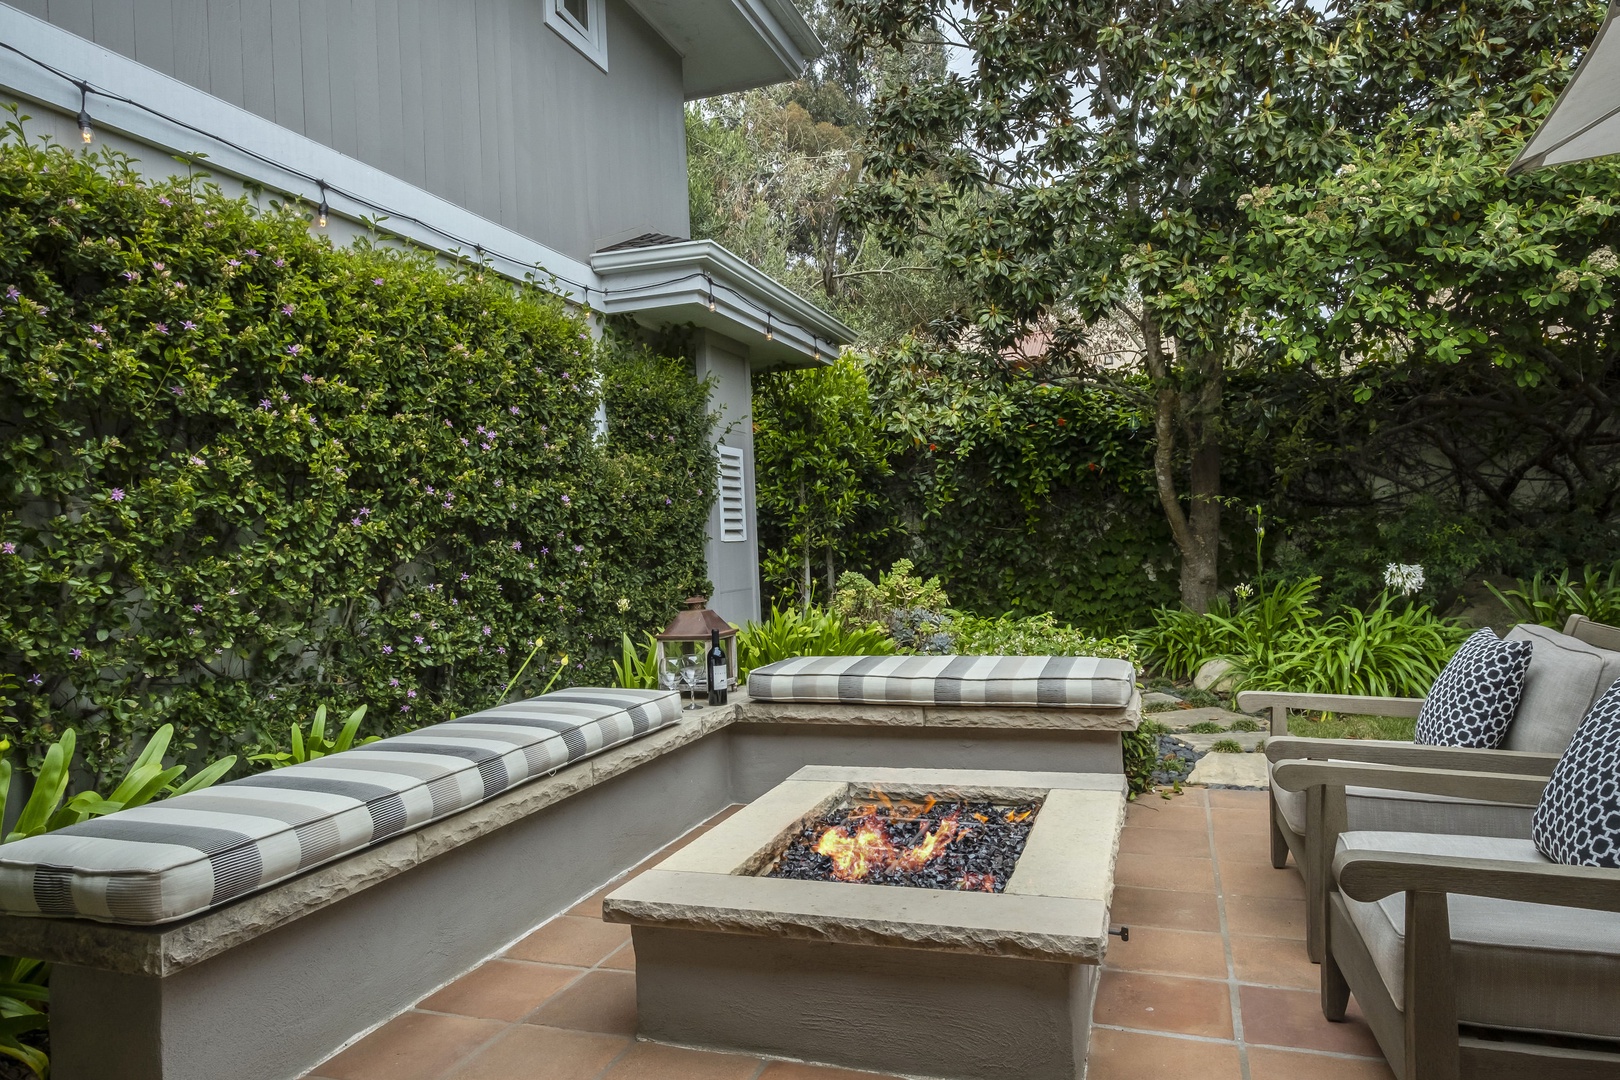 Beautiful backyard with firepit, conversational seating